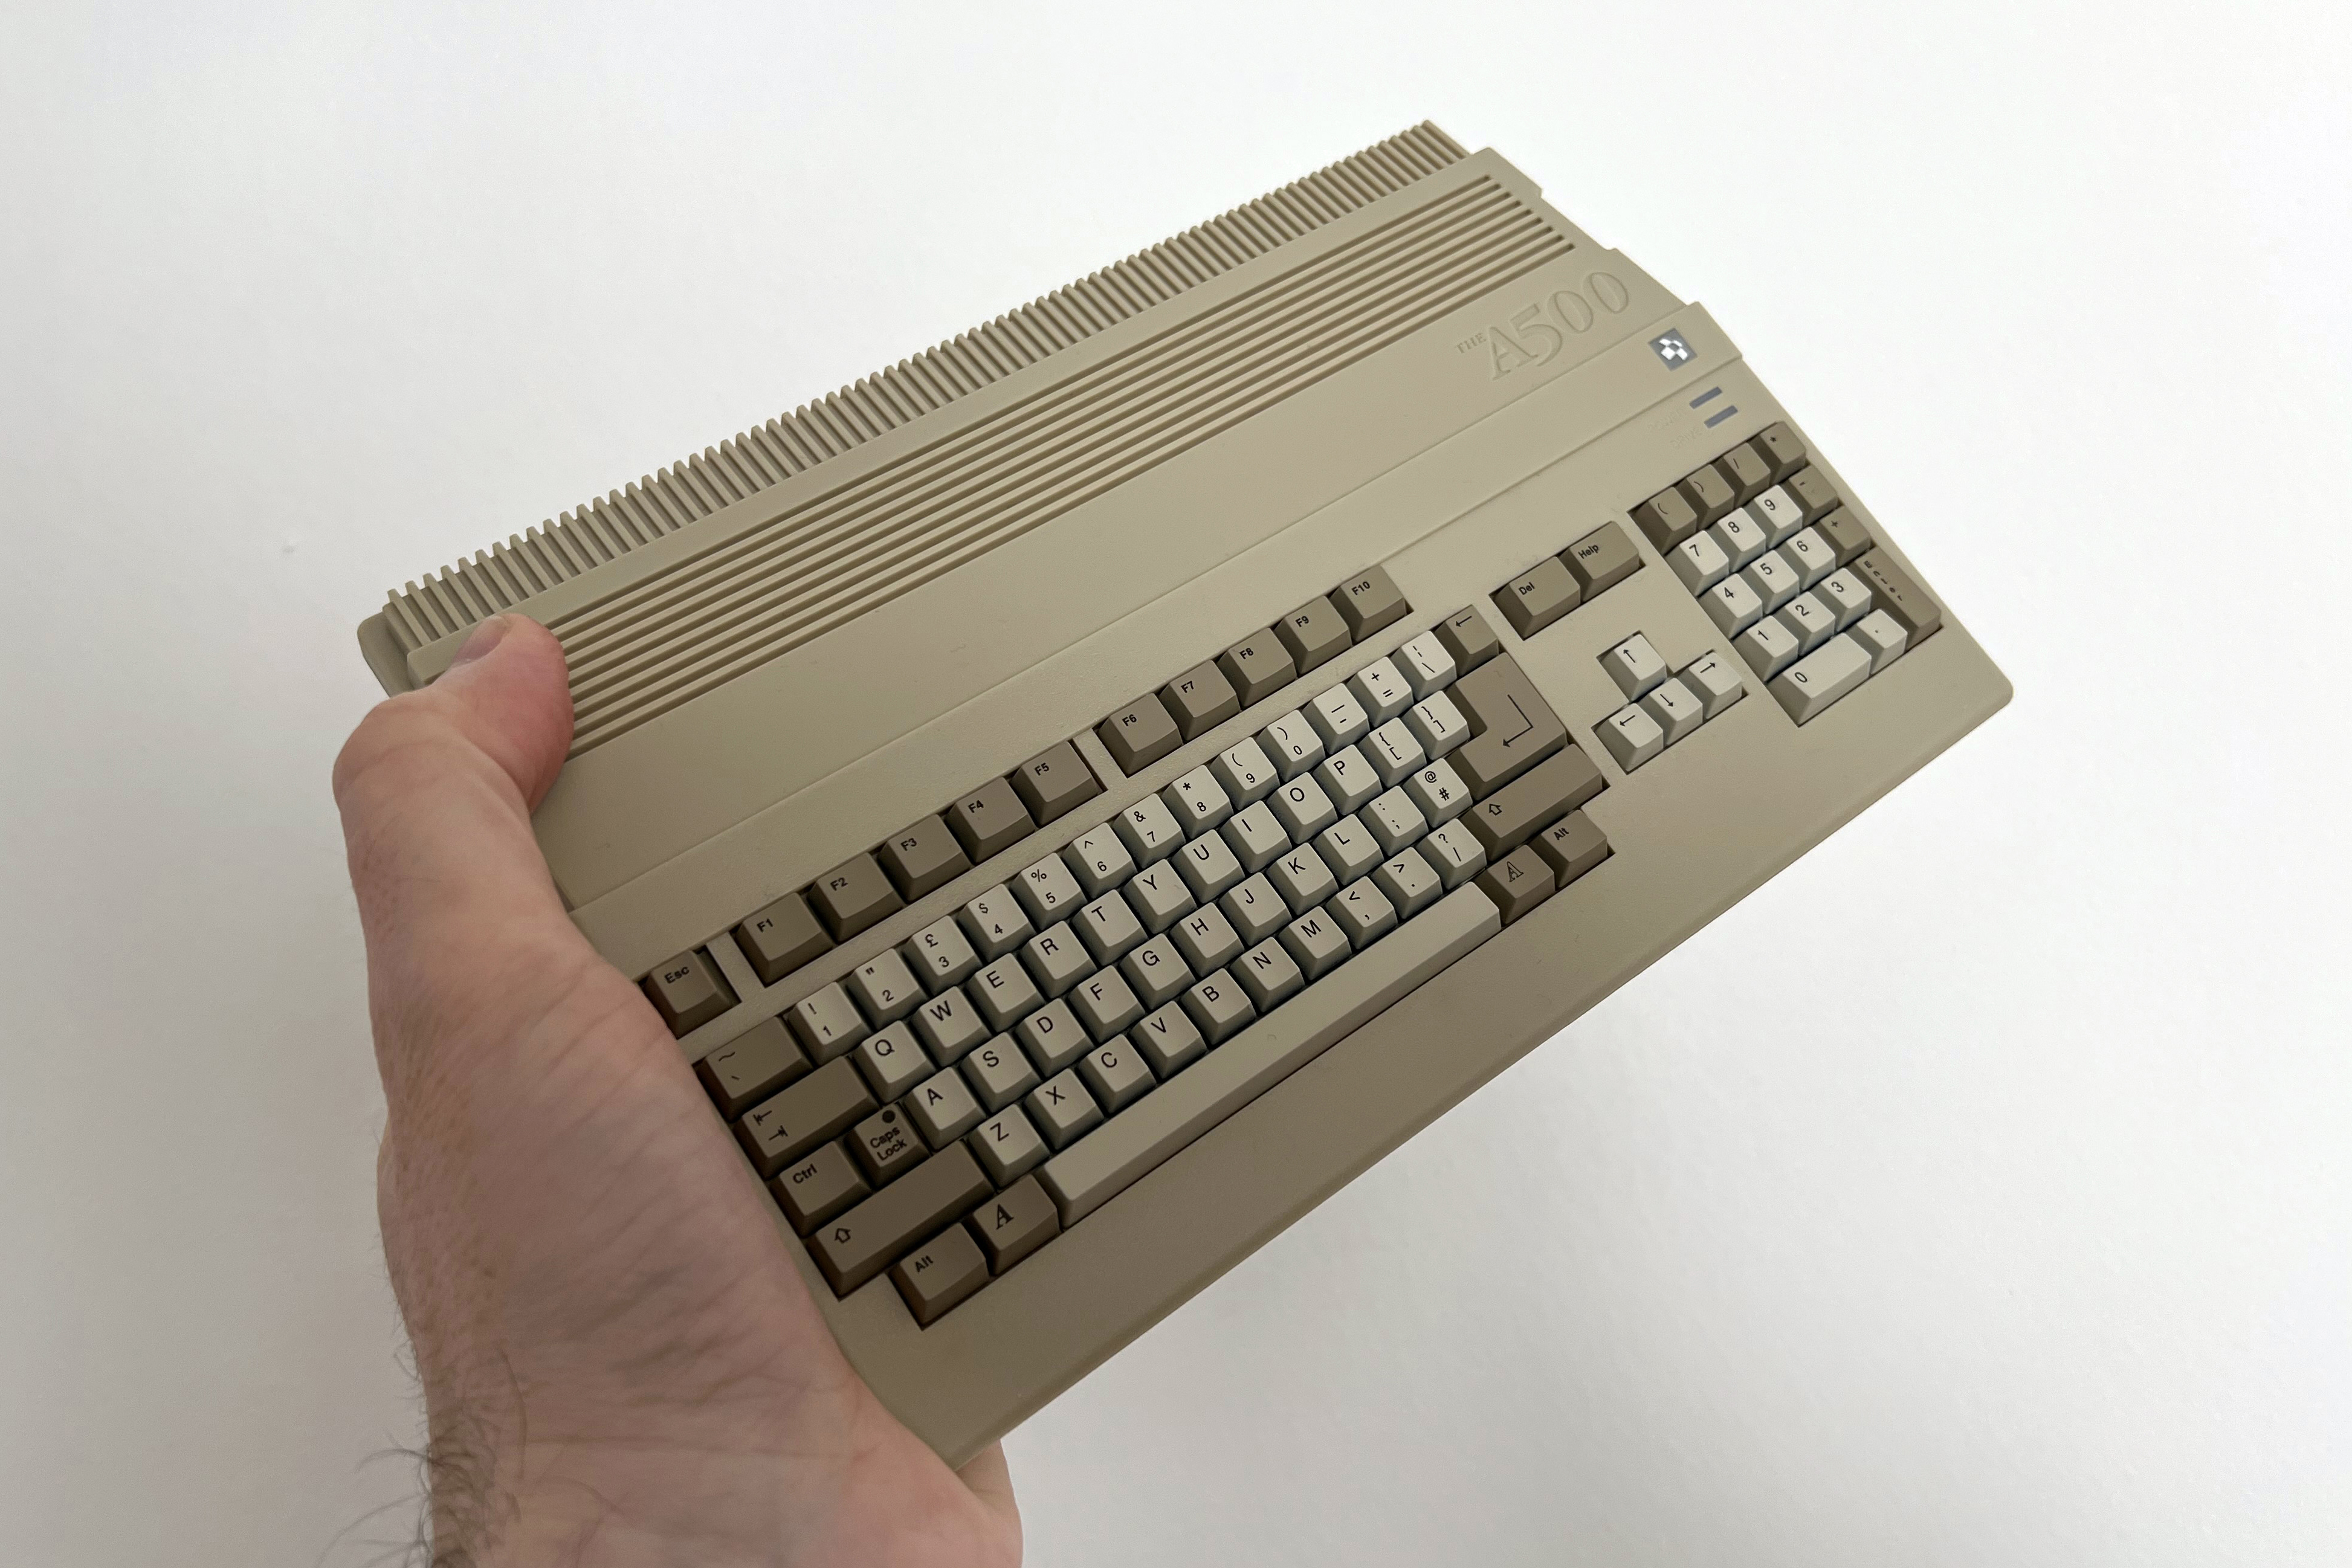 THEA500 Mini review: Commodore's Amiga returns after a hot wash